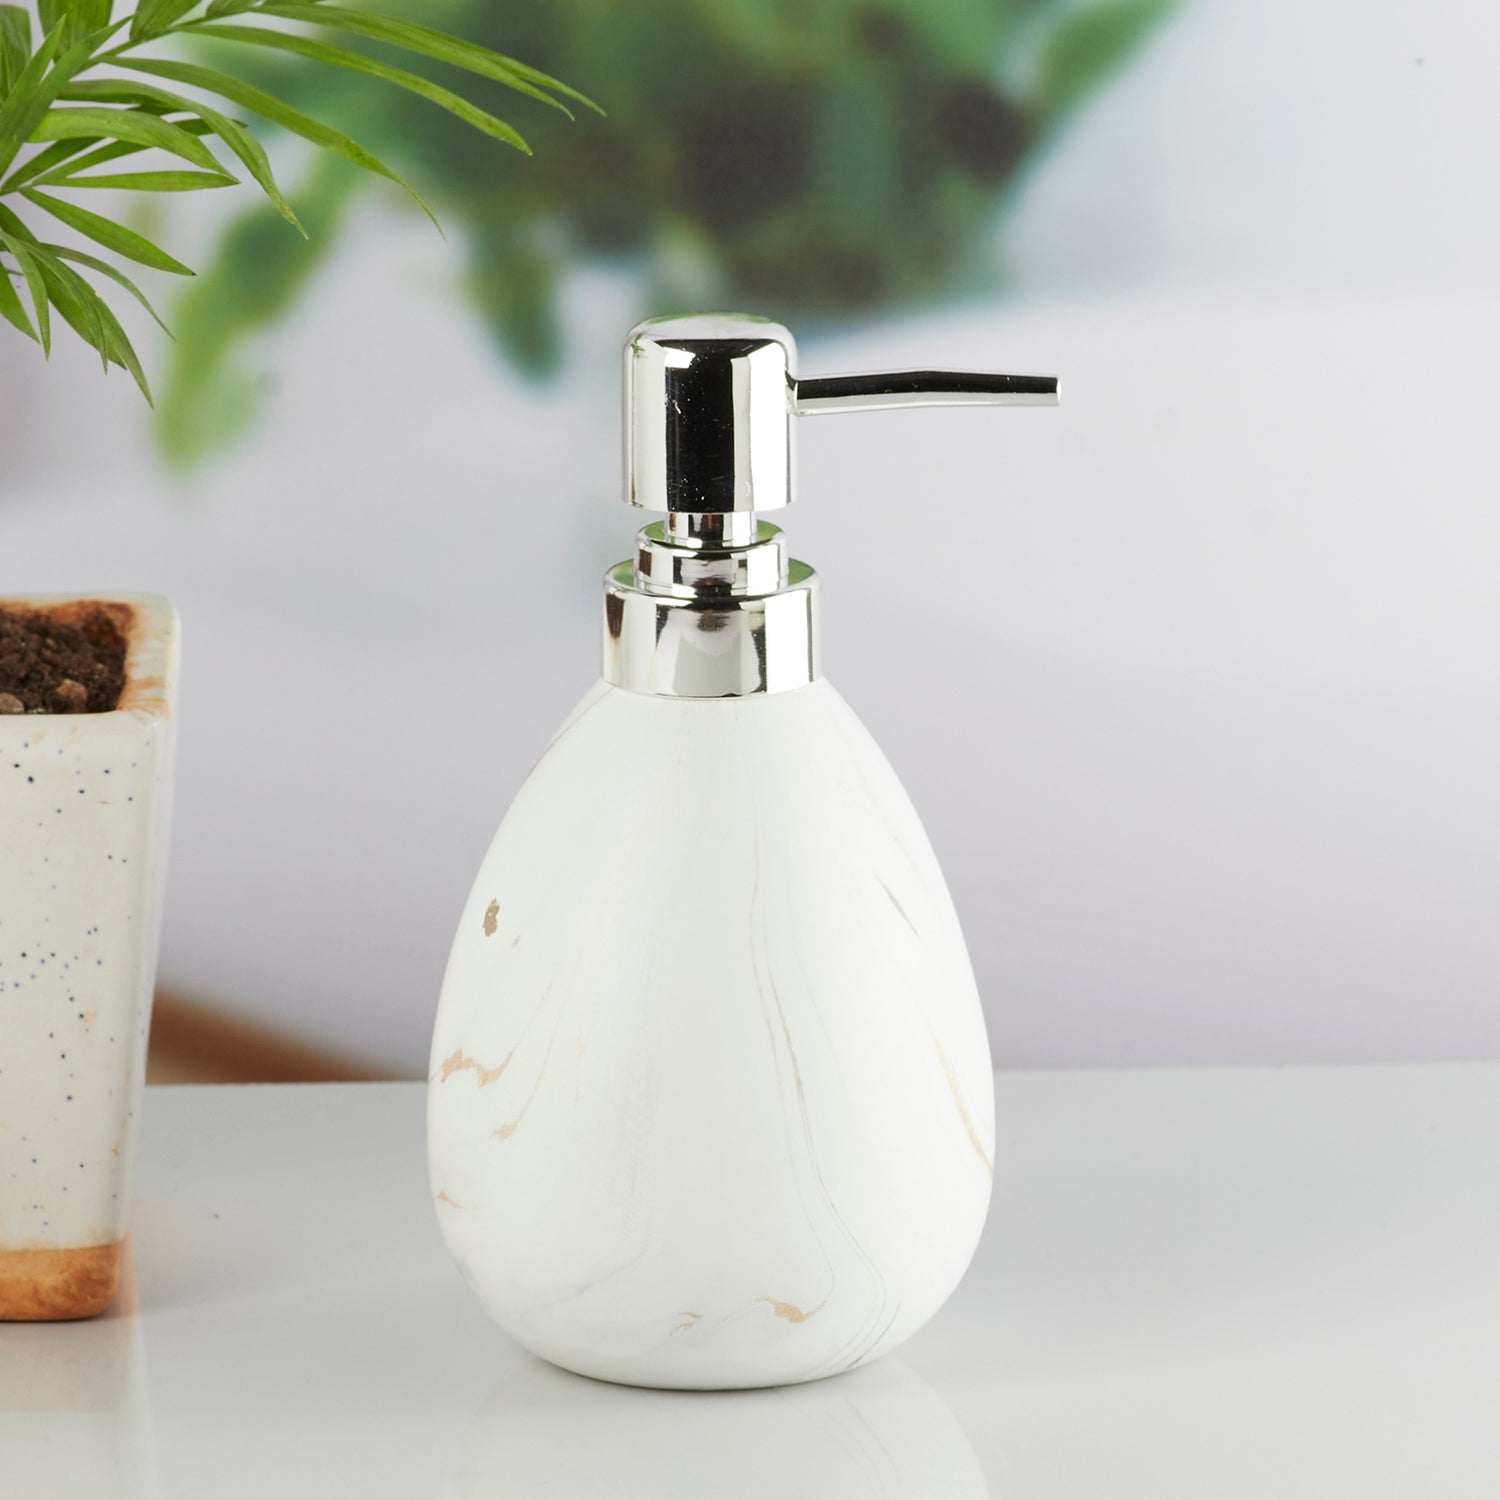 Ceramic Soap Dispenser handwash Pump for Bathroom, Set of 1, Black/Gold (10309)